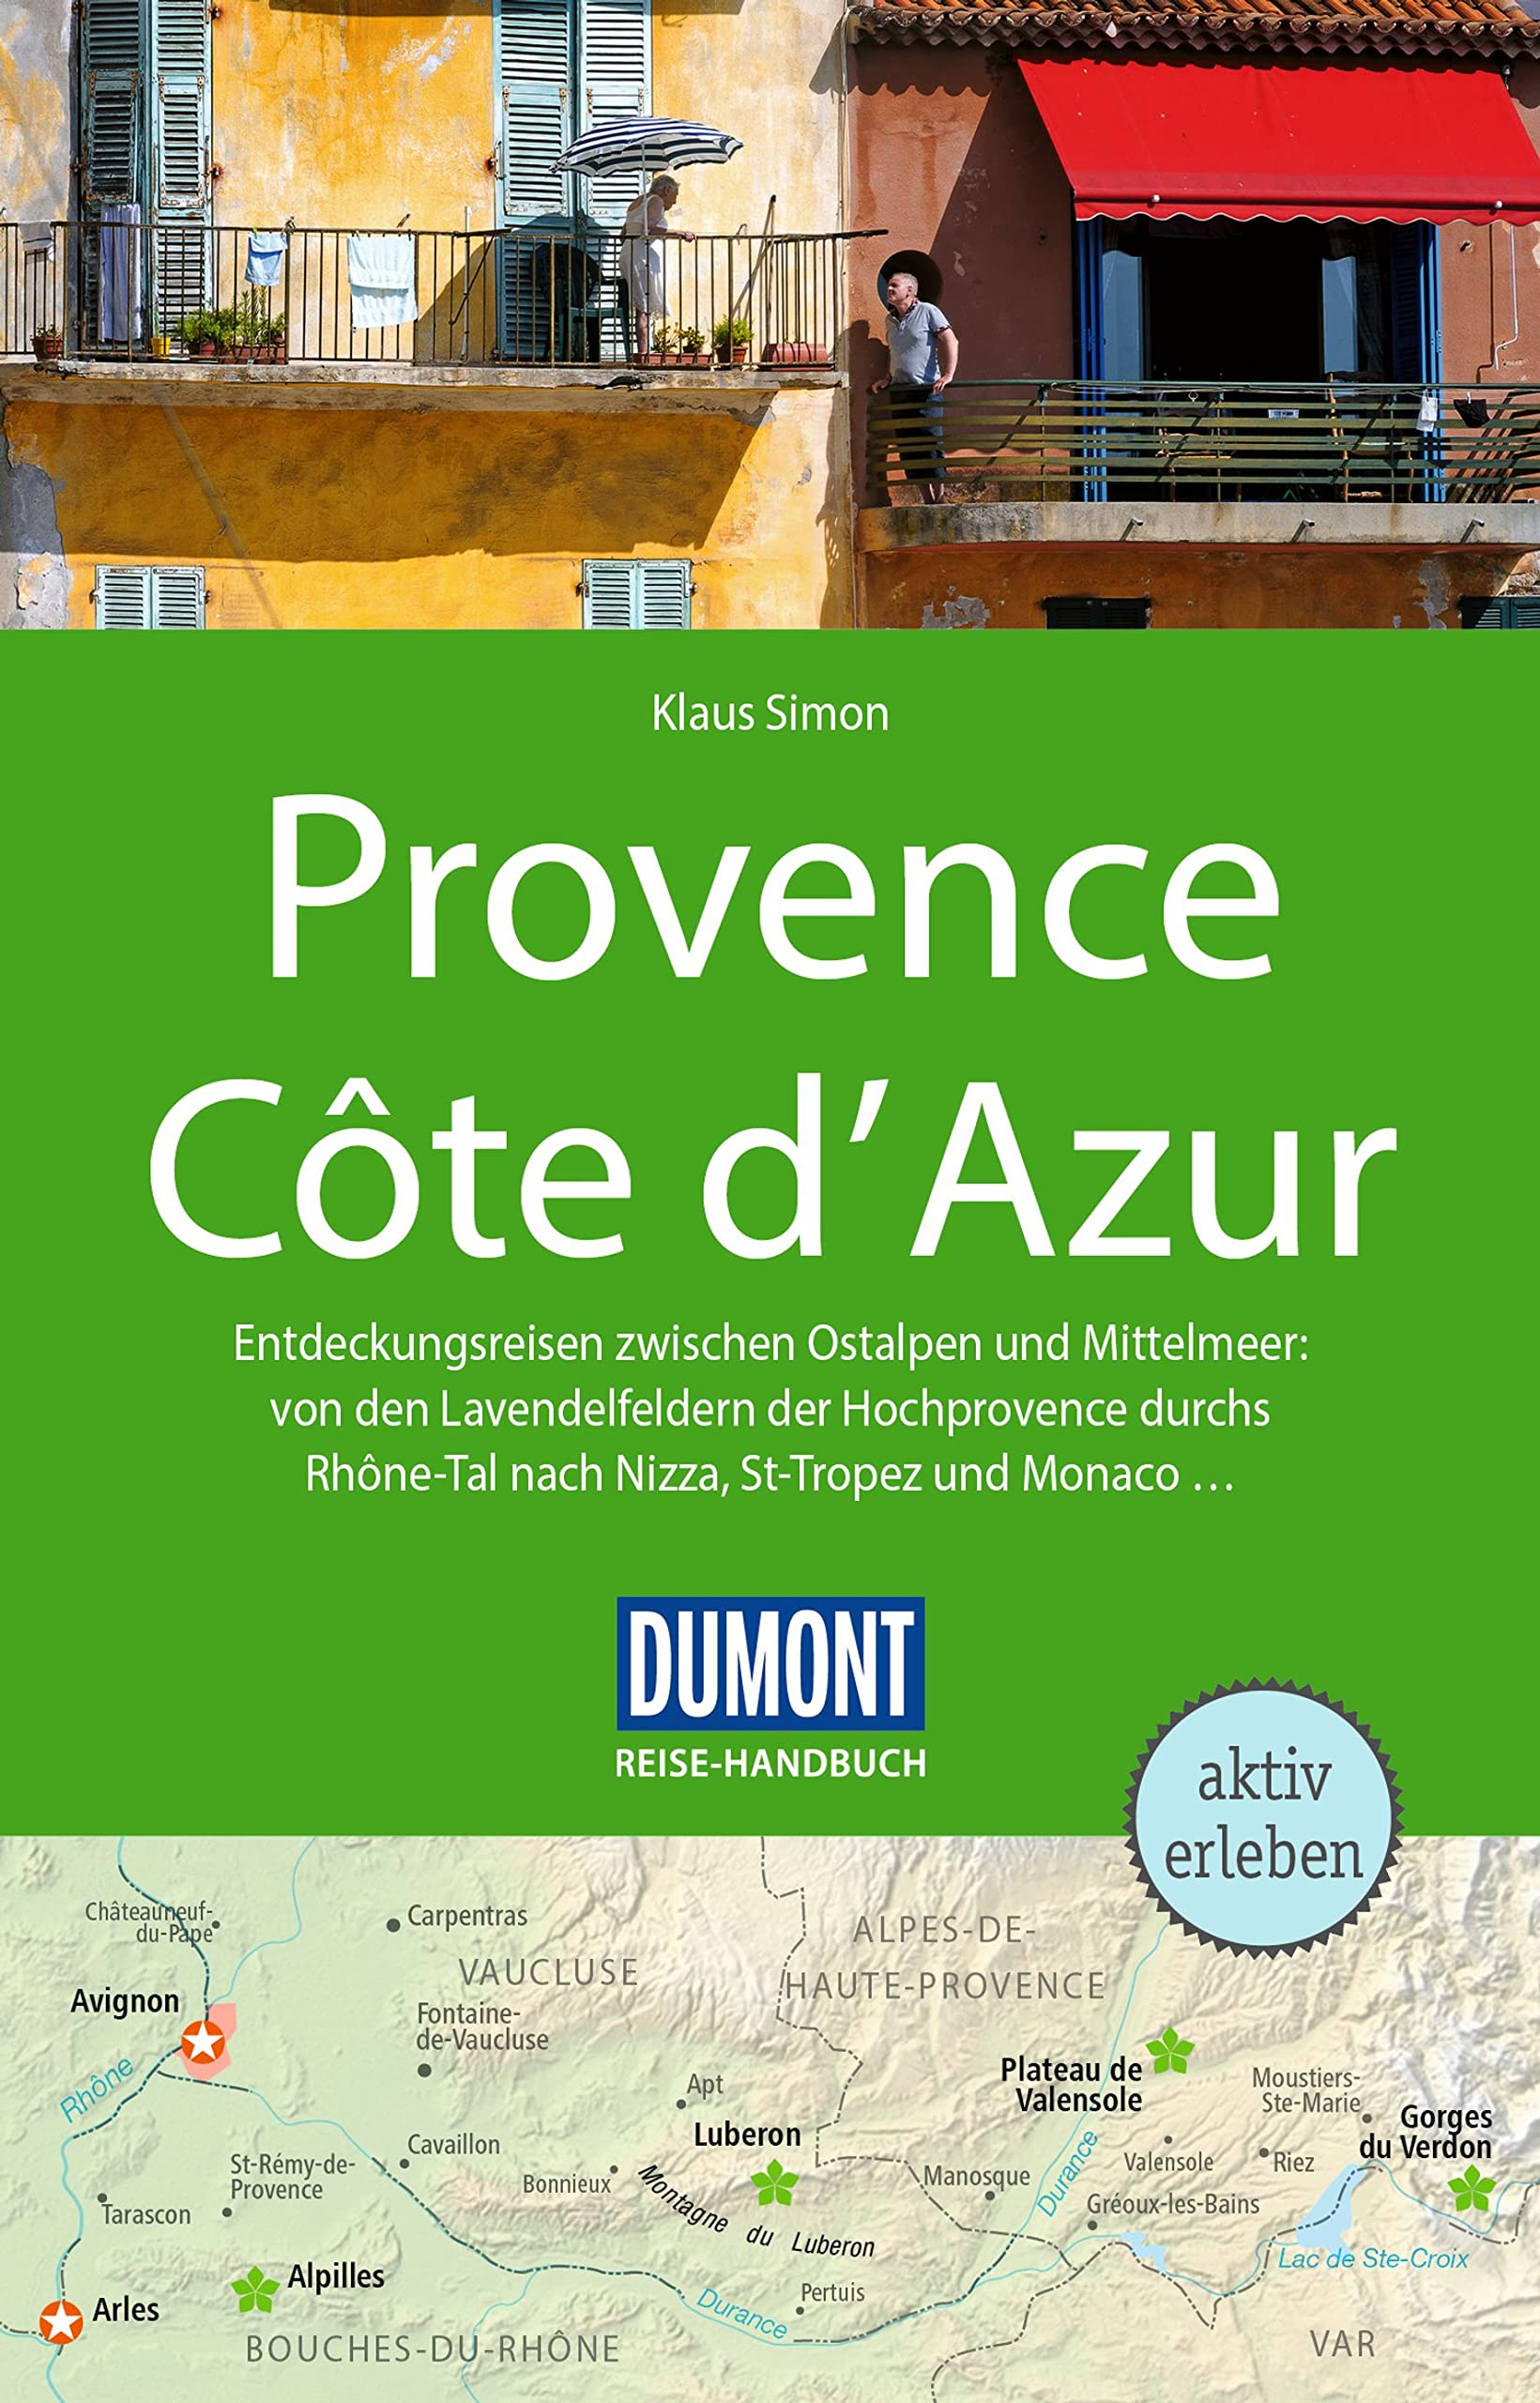 Online bestellen: Reisgids Reise-Handbuch Provence - Côte d'Azur | Dumont